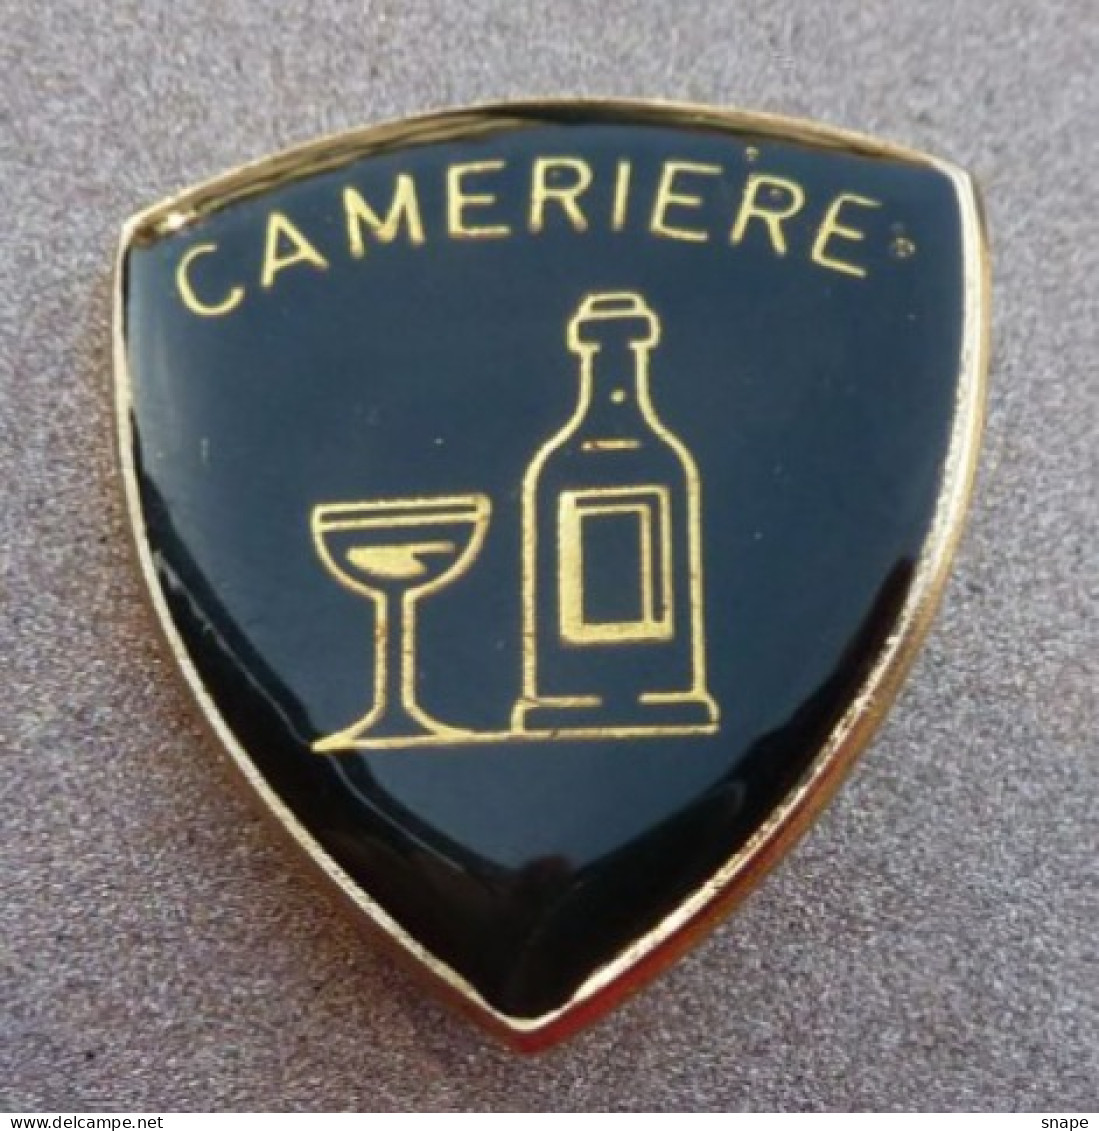 DISTINTIVO Vetrificato A Spilla CAMERIERE  - Esercito Italiano Incarichi - Italian Army Pinned Badge - Used (286) - Heer